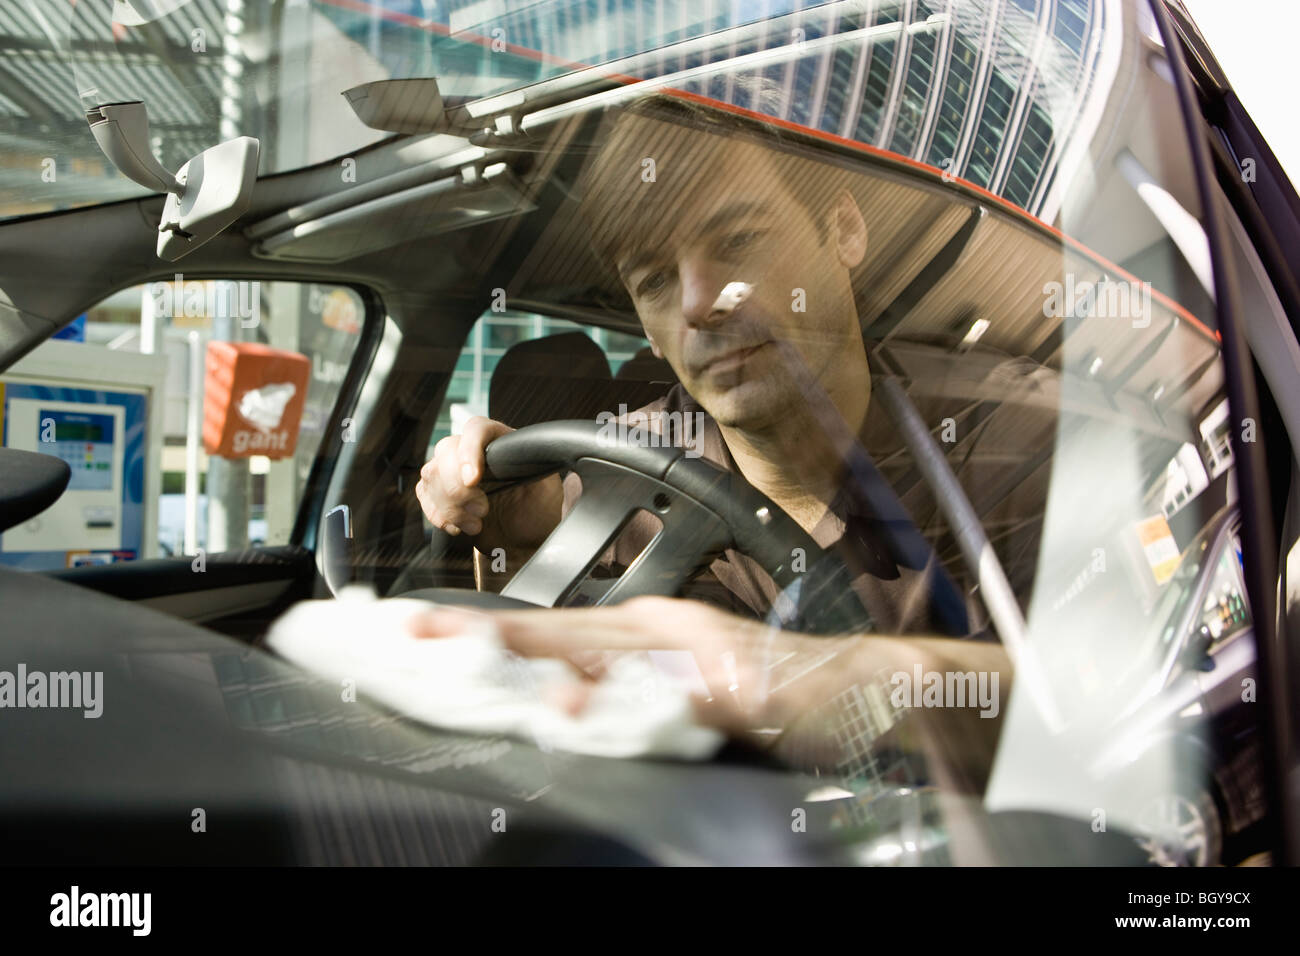 Man cleaning car dashboard Stock Photo